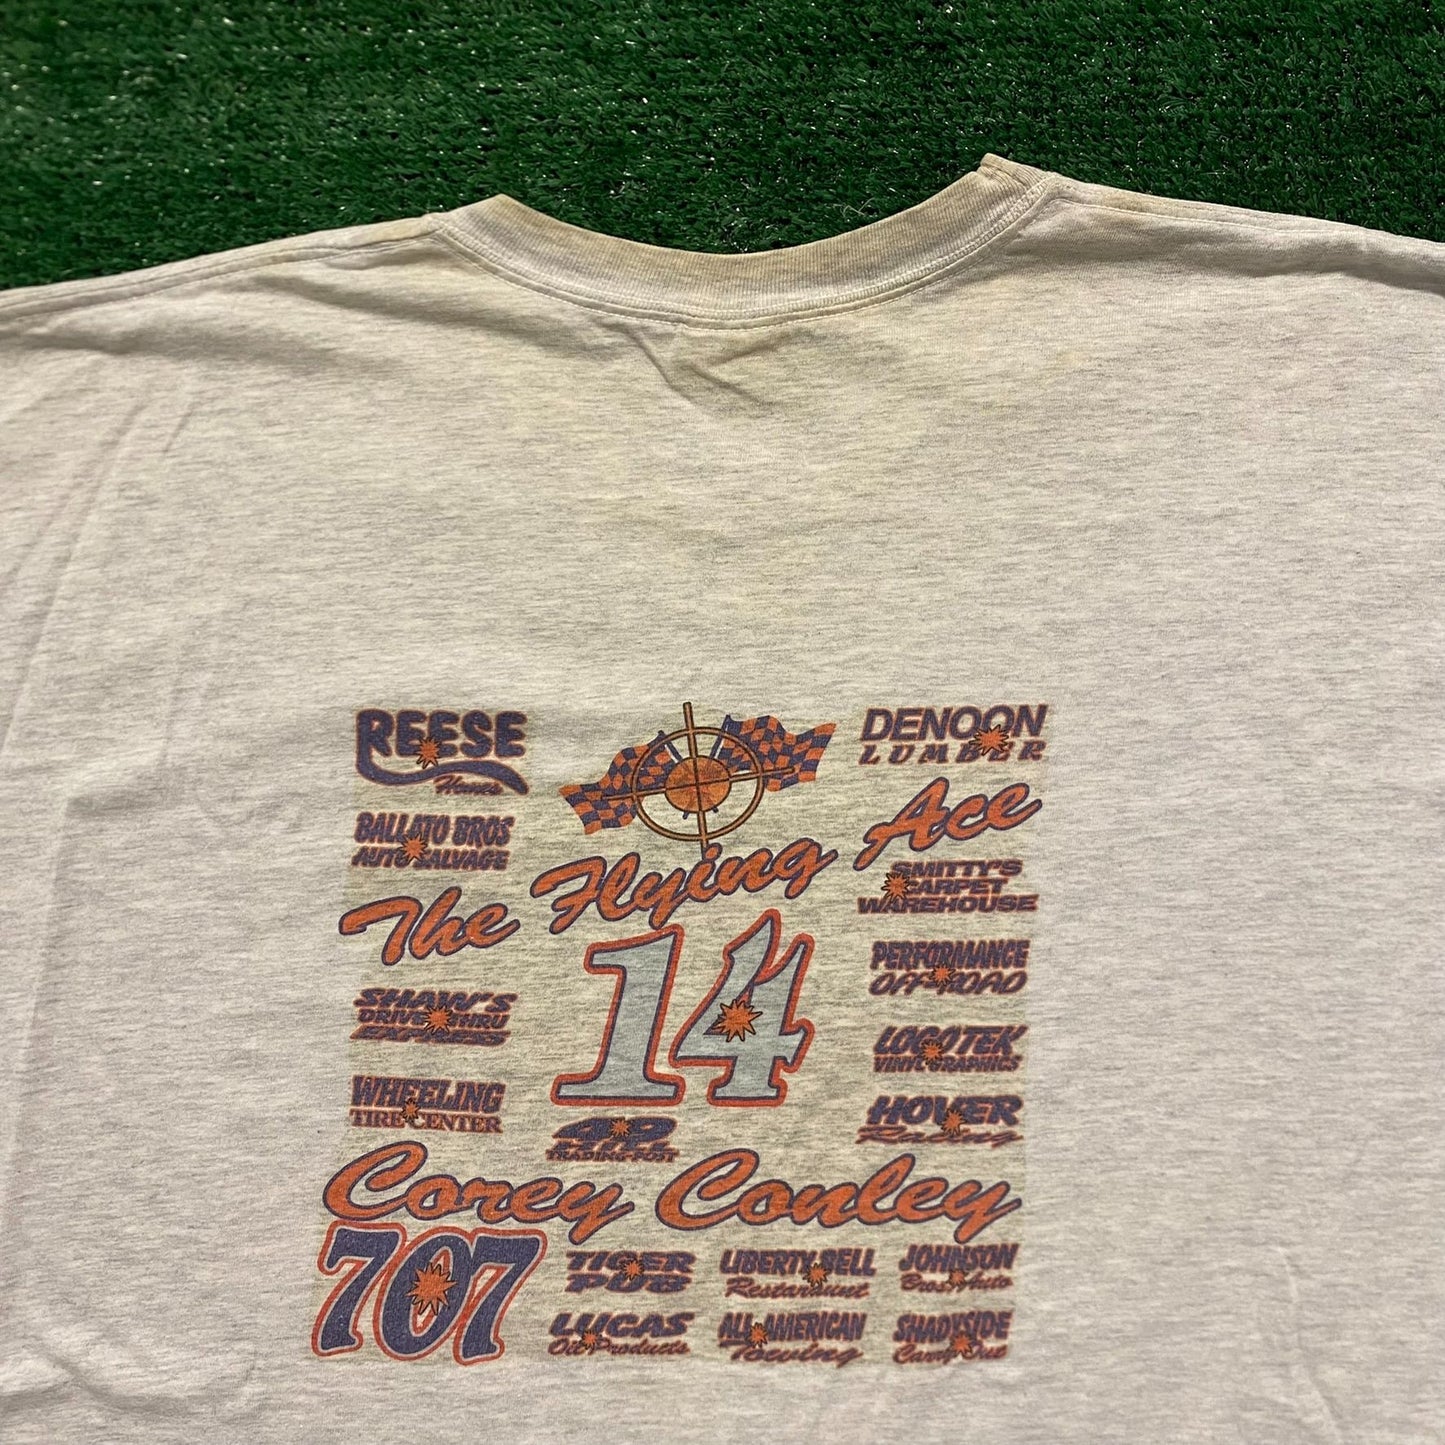 Corey Conley Vintage 90s Racing T-Shirt